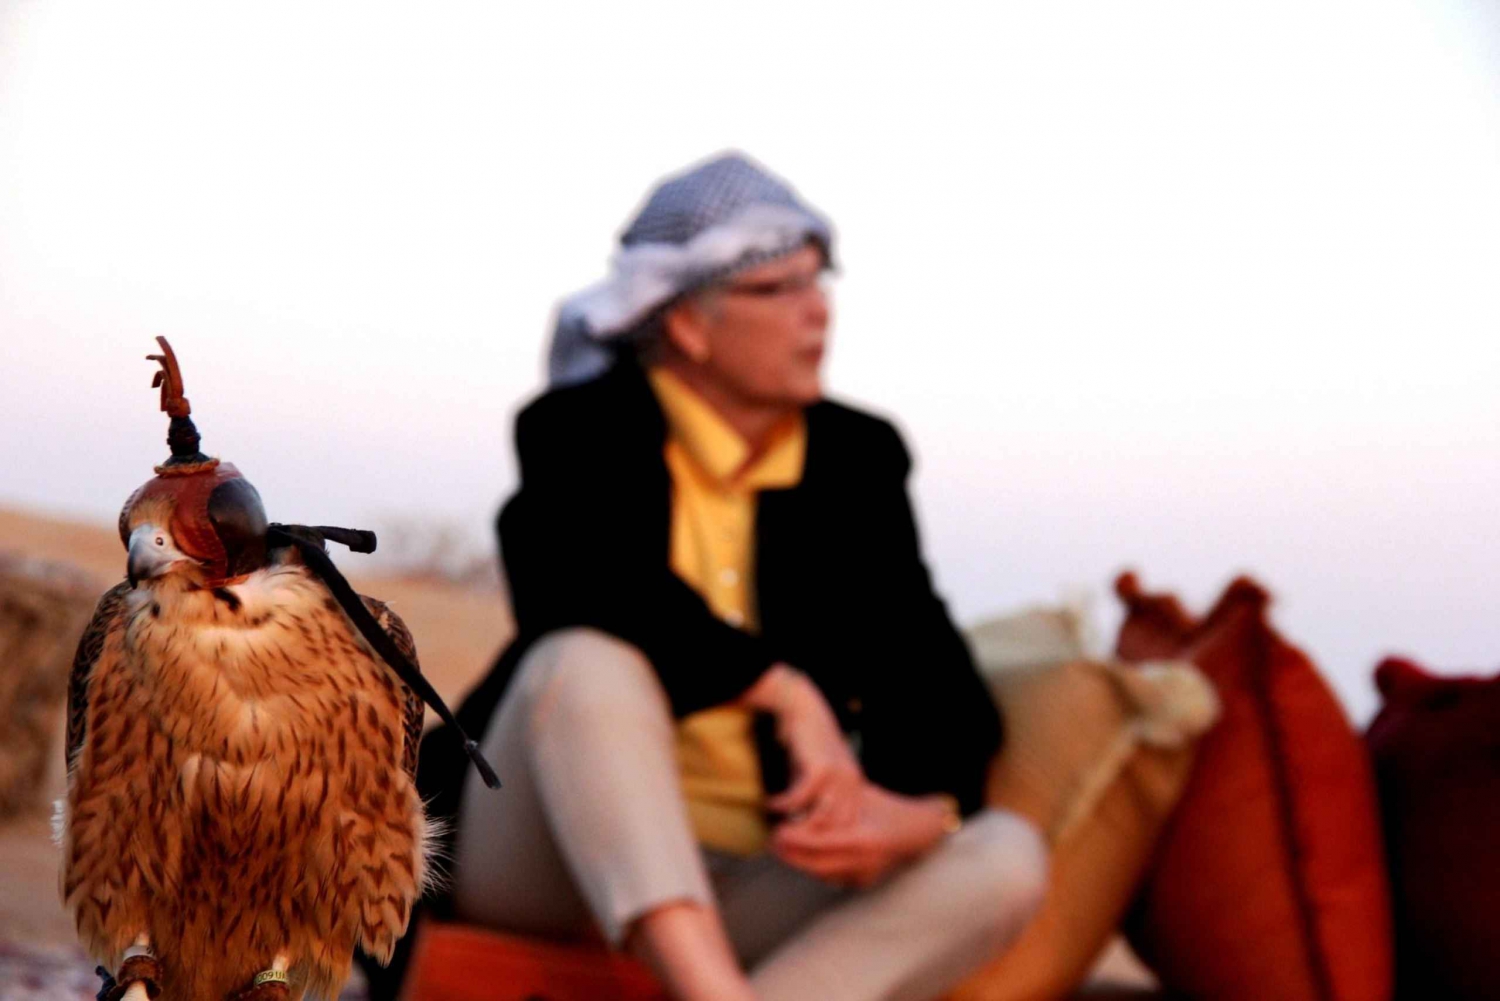 Dubai: Desert Safari with Camel Ride